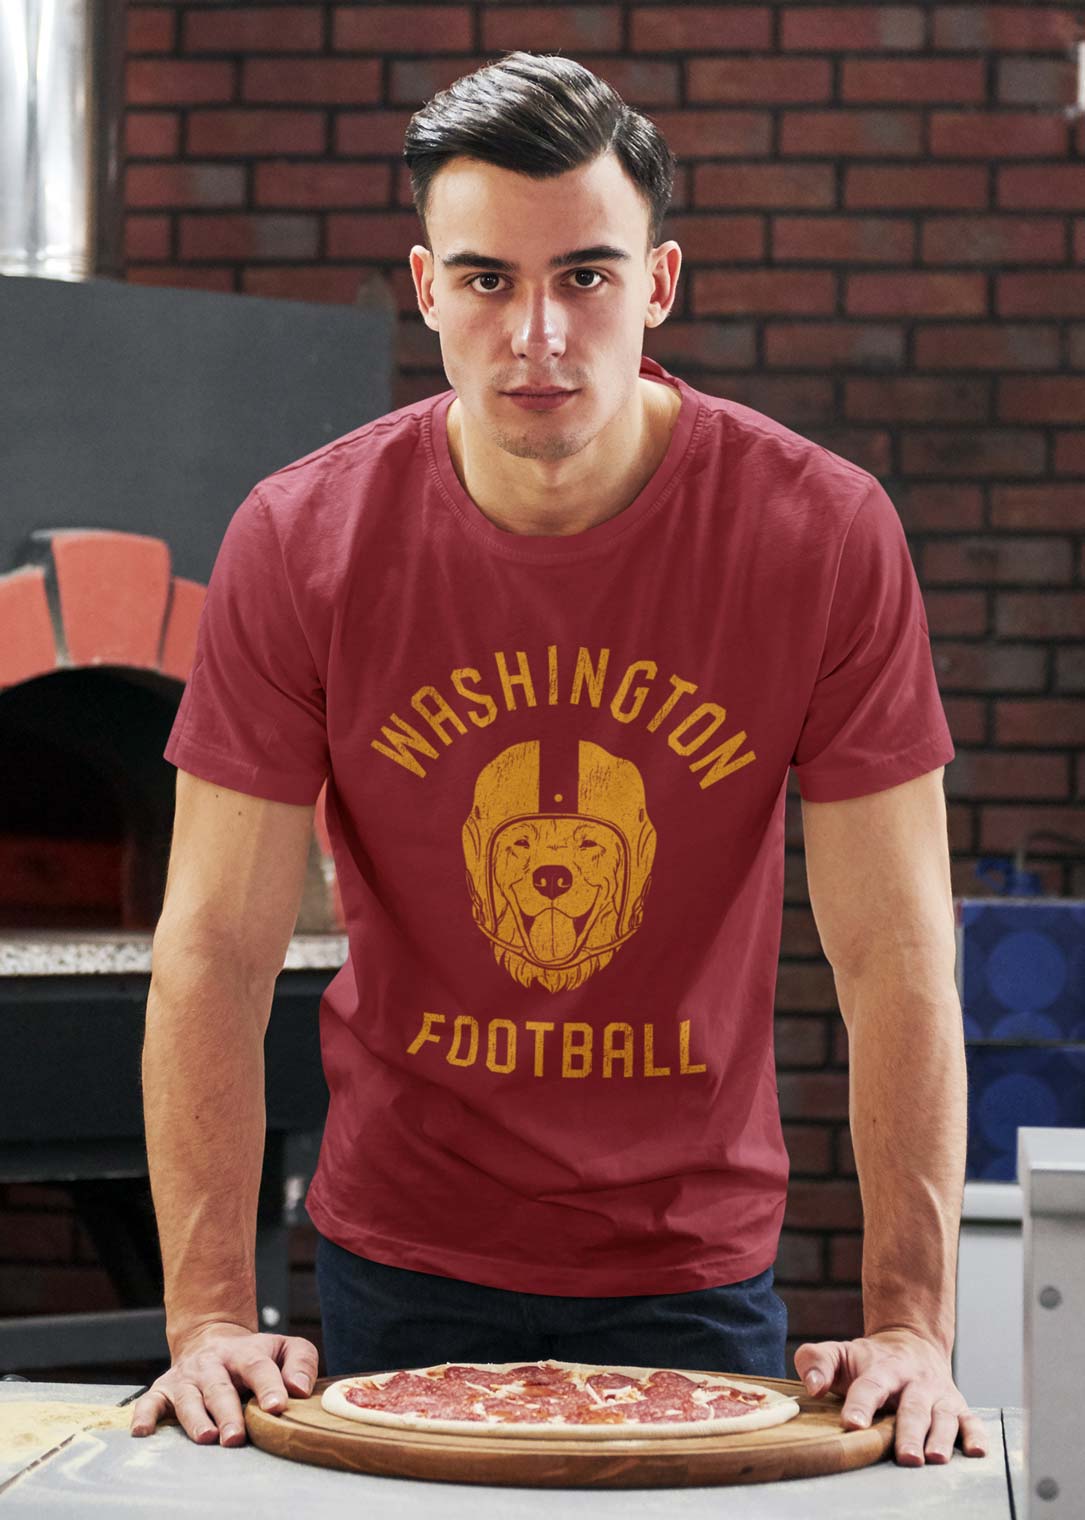 Washington Football Golden Retriever T-Shirt